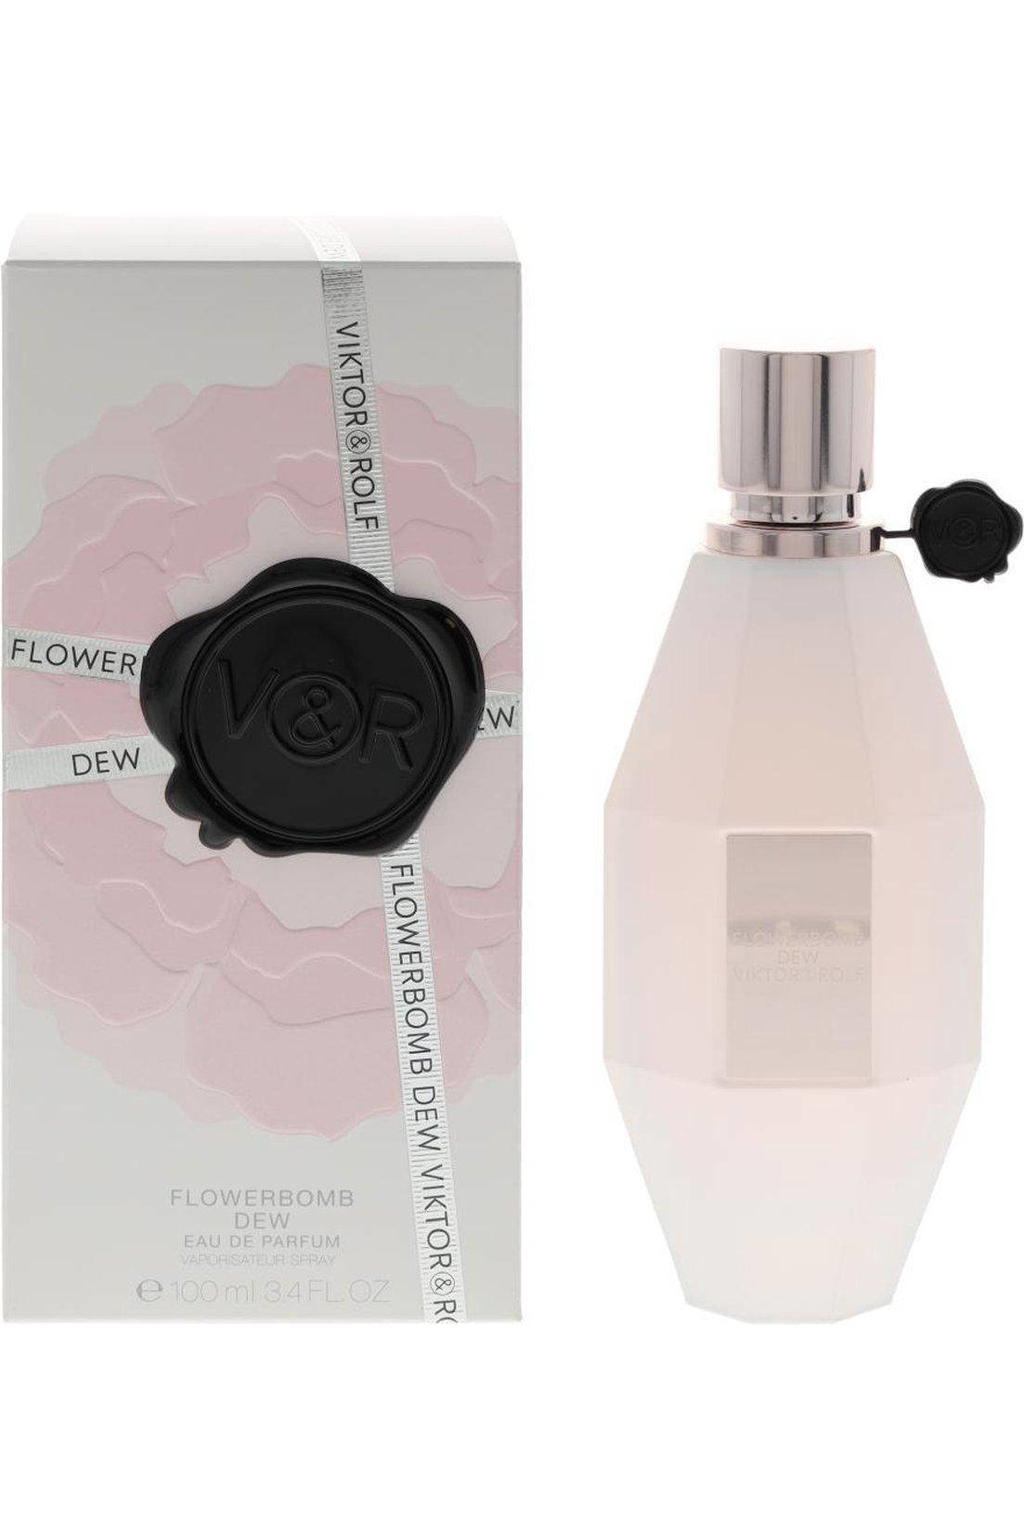 Viktor & Rolf Flowerbomb Dew eau de parfum - 100 ml